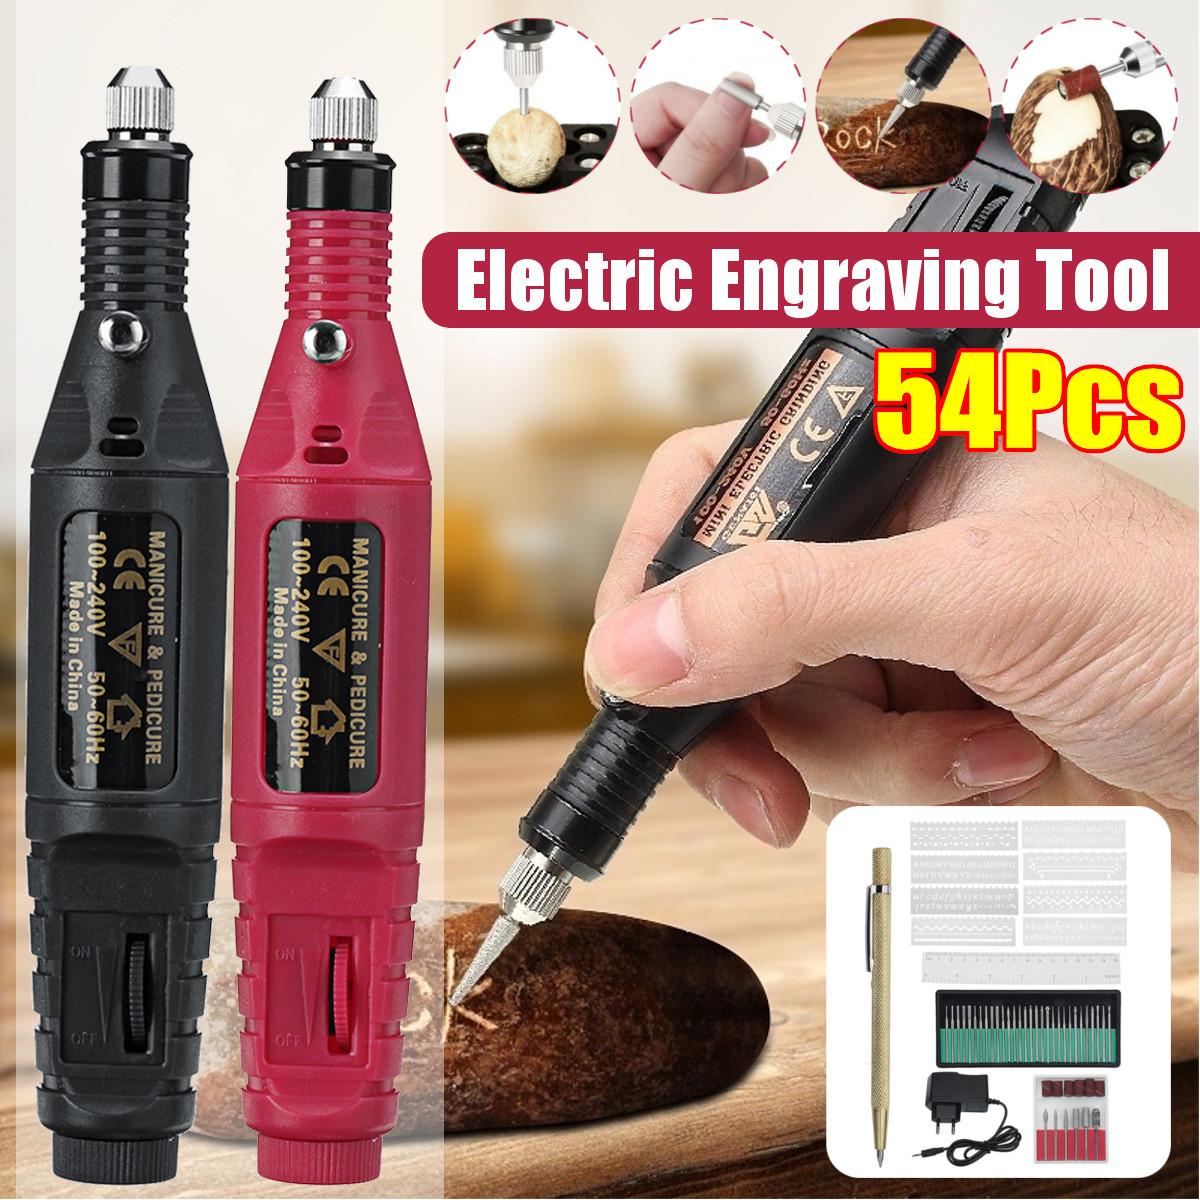 12V-54Pcs-Electric-Engraving-Pen-Kit-Regulated-Speed-Mini-DIY-Etching-Drilling-Polishing-Pen-For-Jew-1684916-2